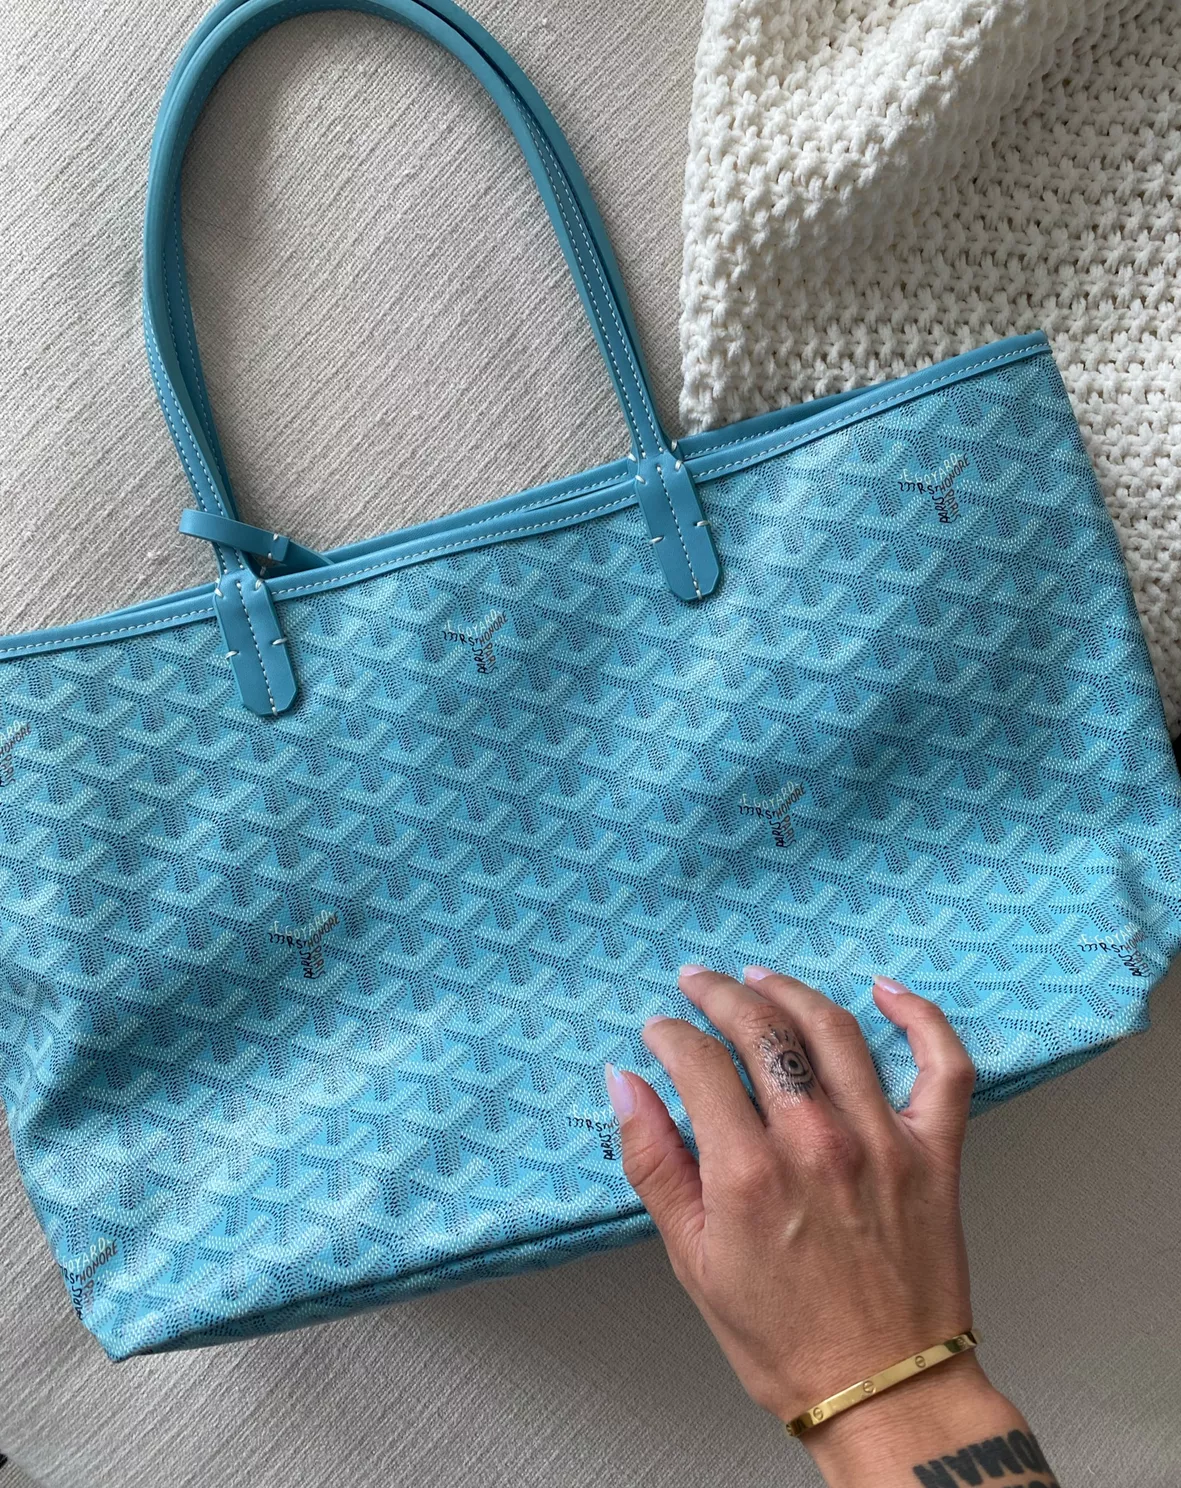 Goyard Tote Blue Bags & Handbags for Women